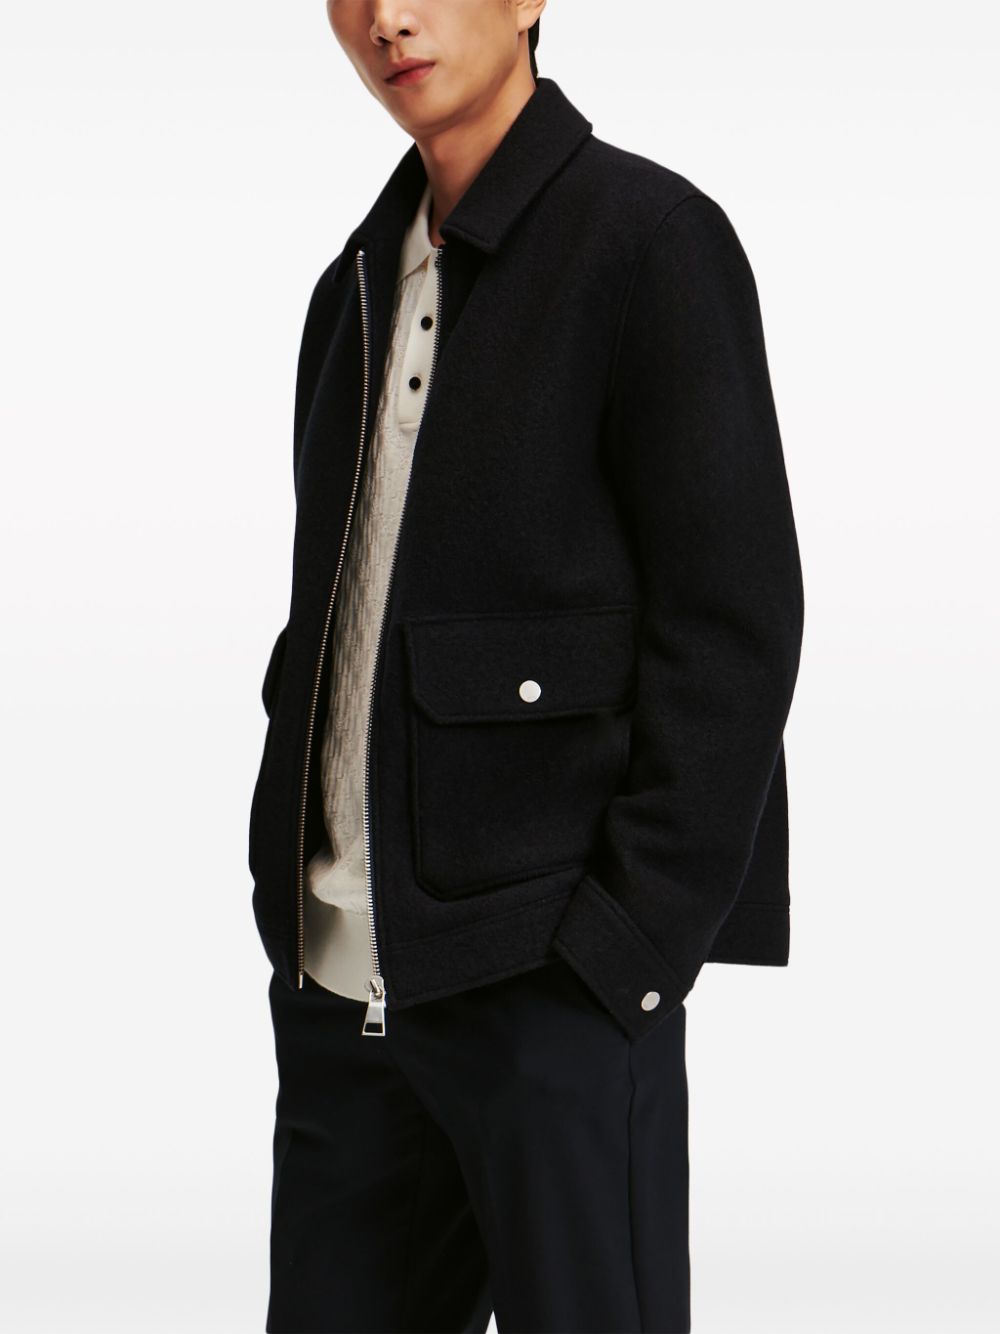 Karl Lagerfeld Bouclé shirtjack Zwart